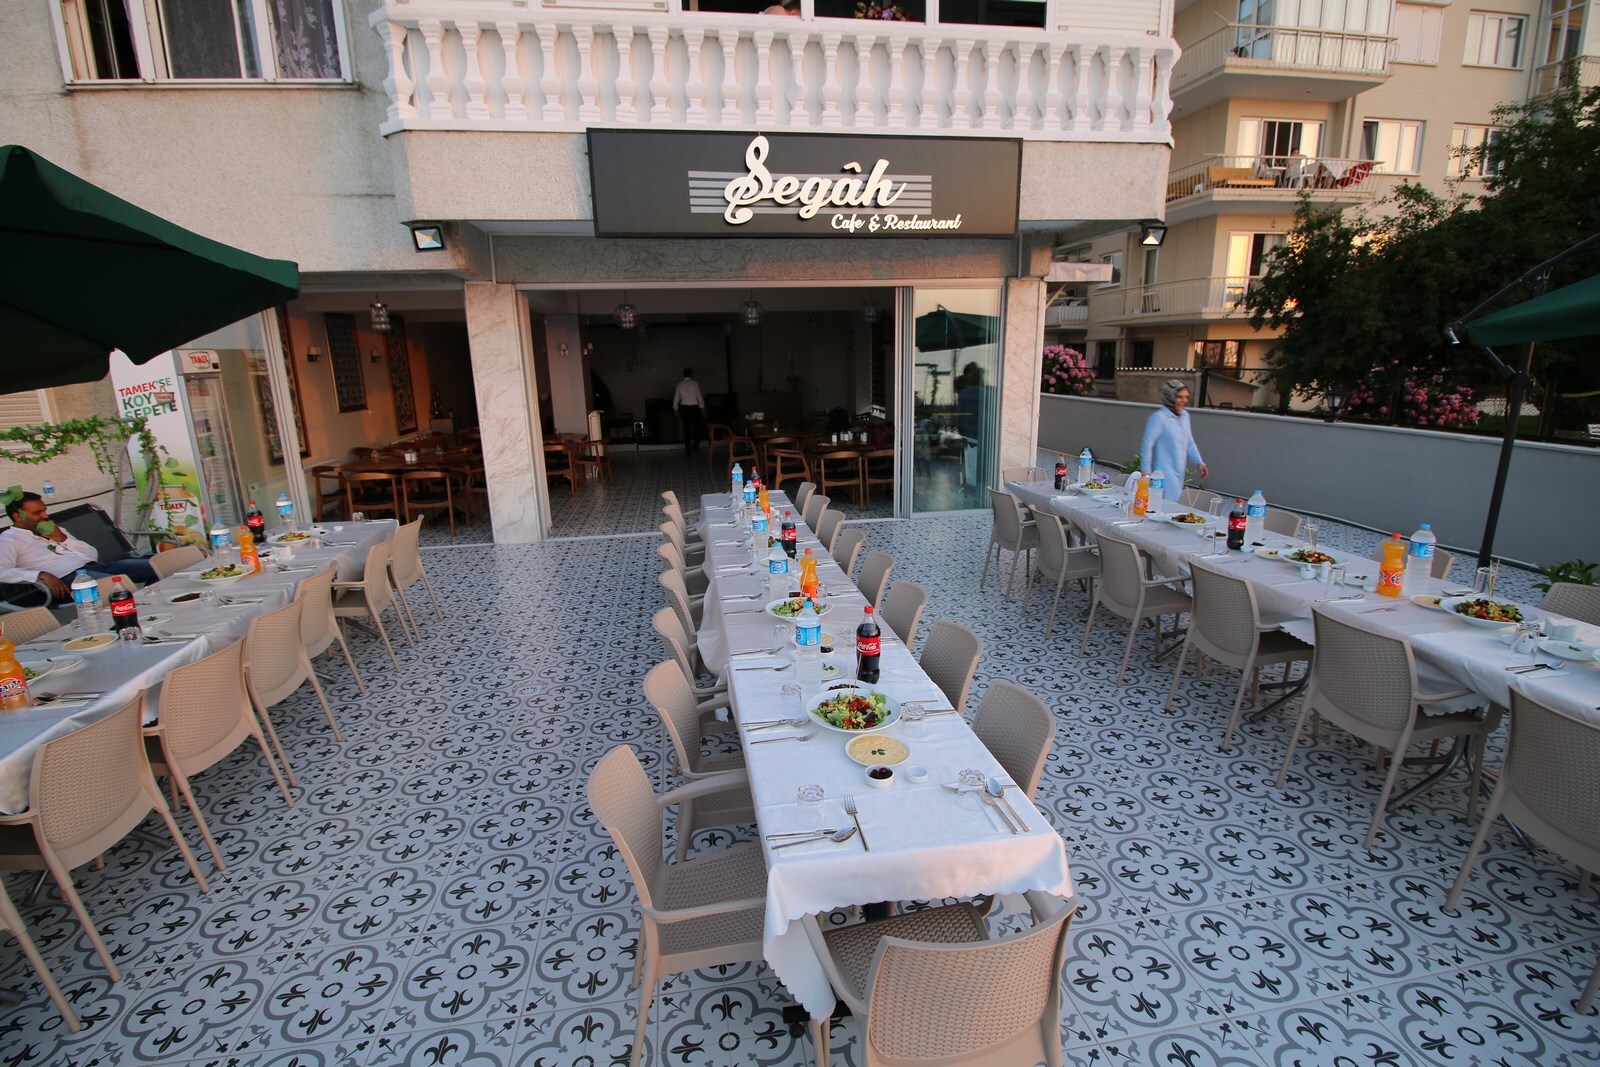 Segah Cafe & Restaurant